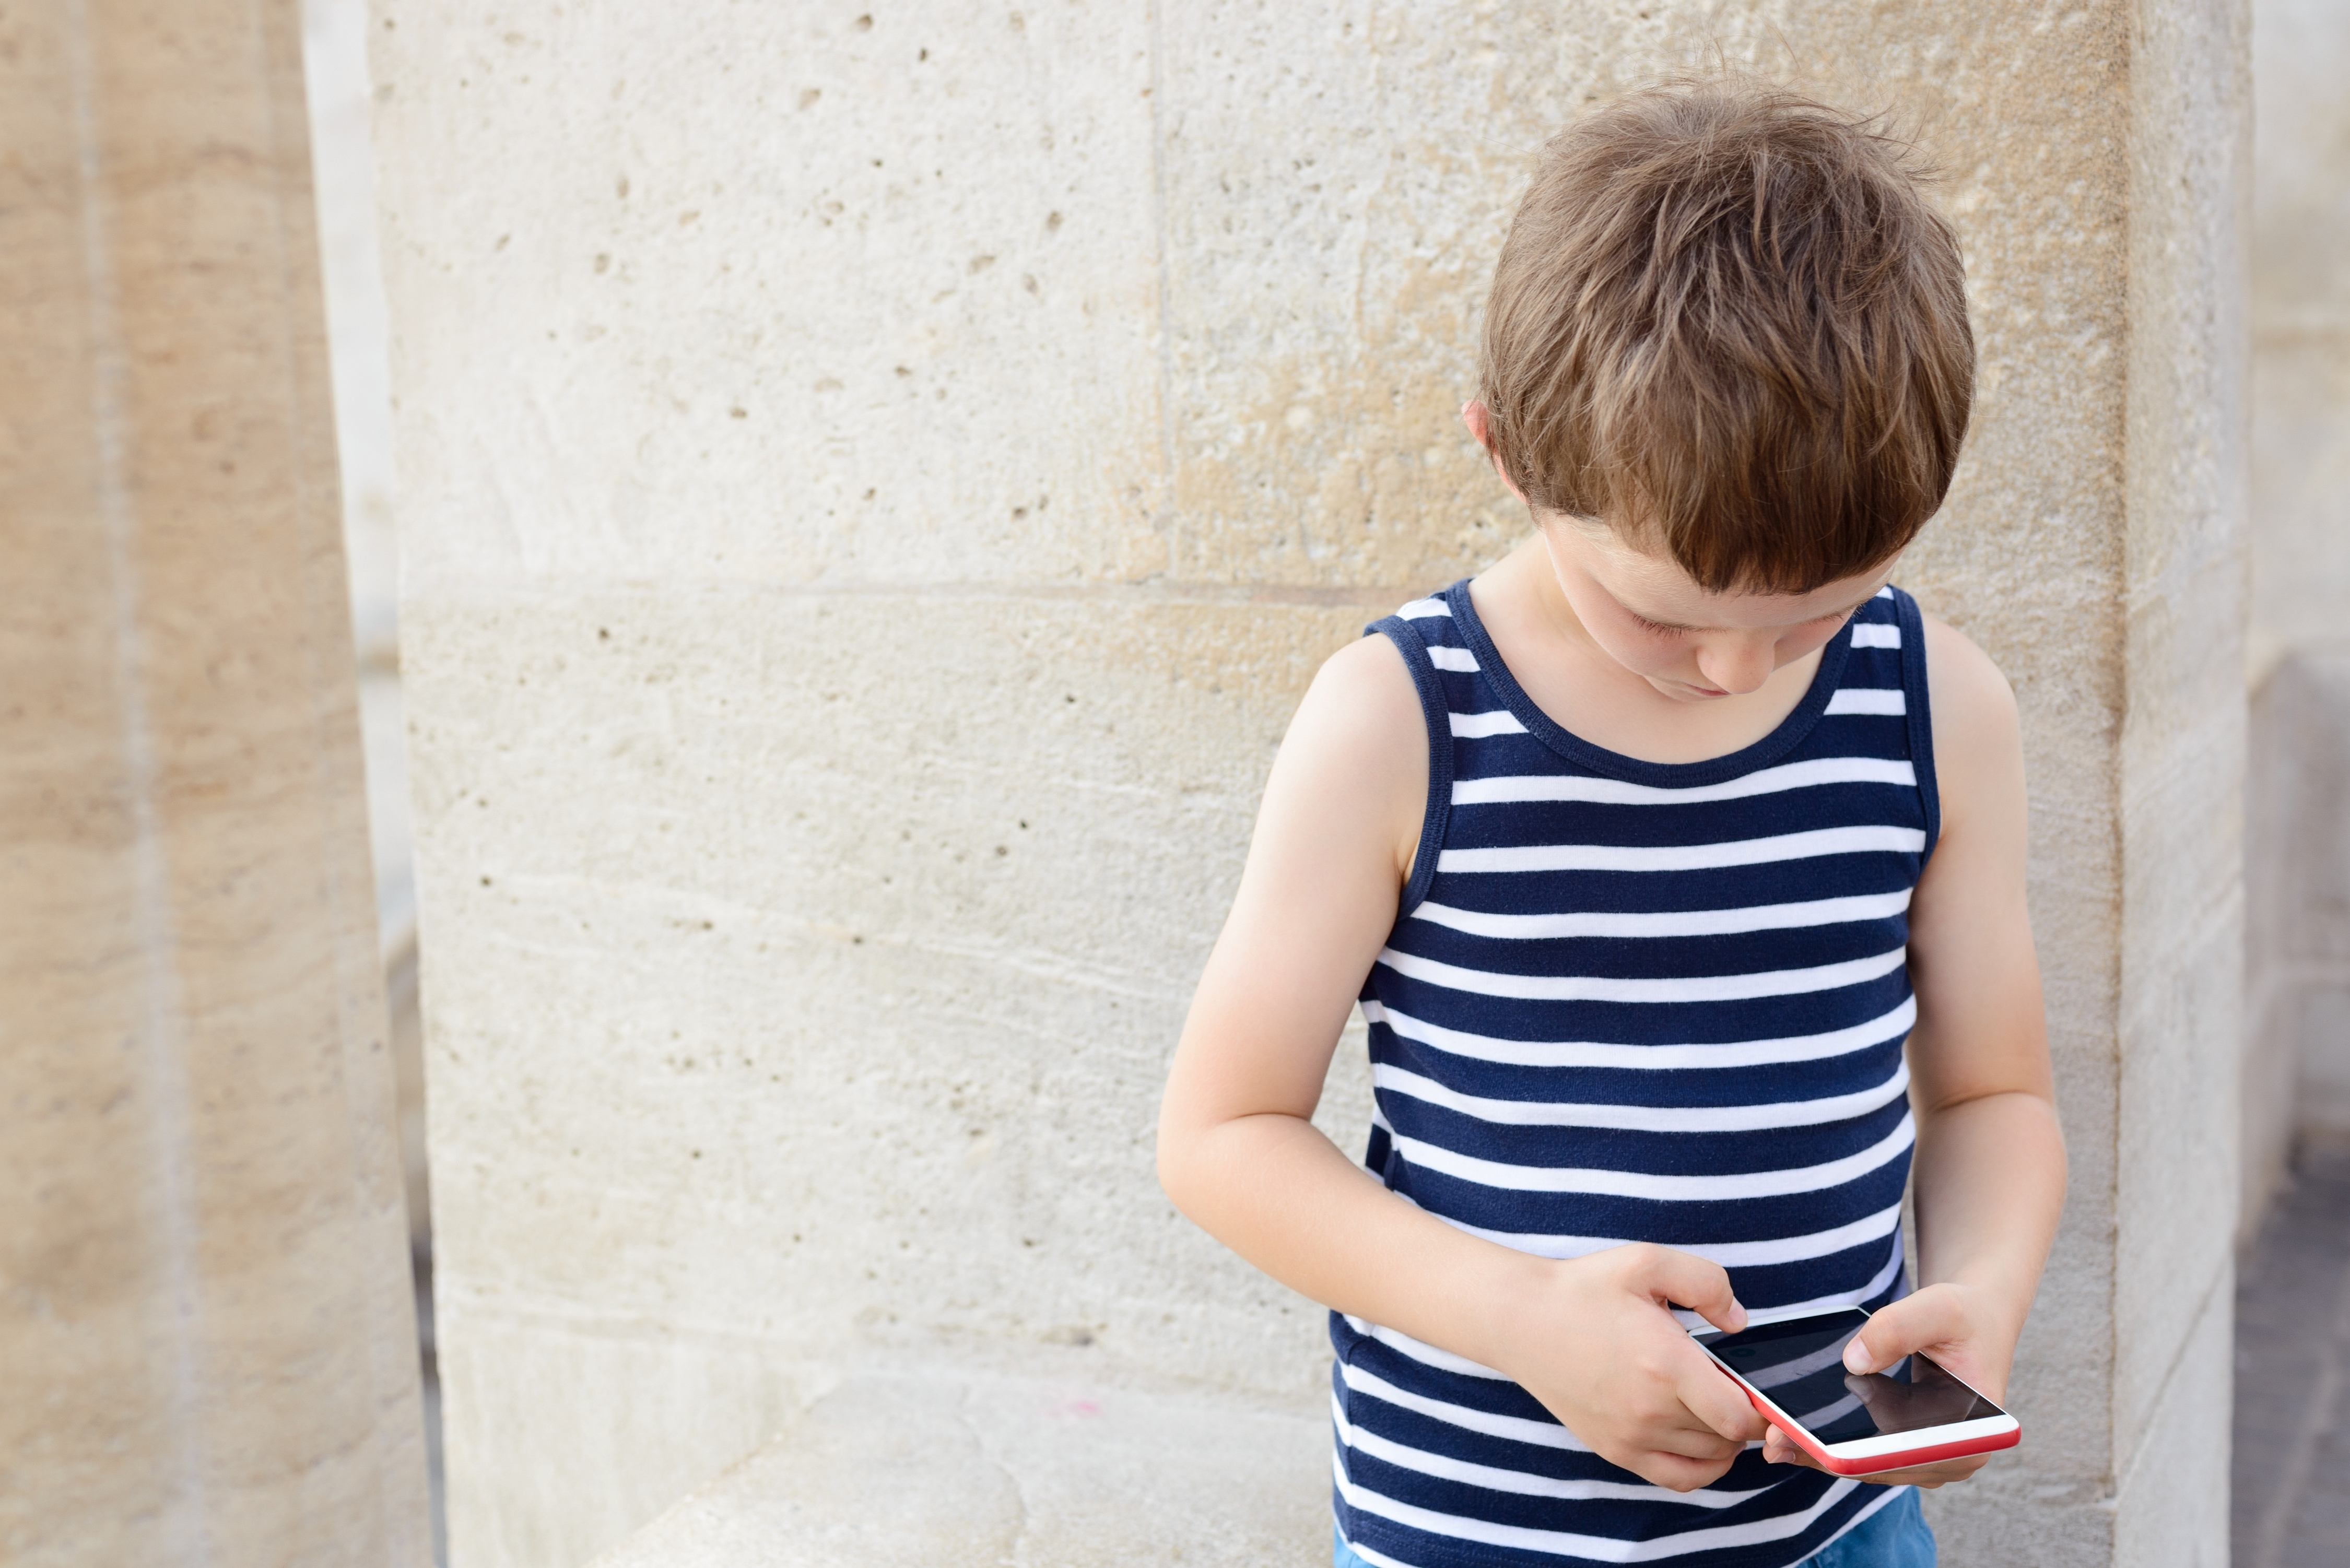 Niño con un teléfono | Fuente: Shutterstock.com